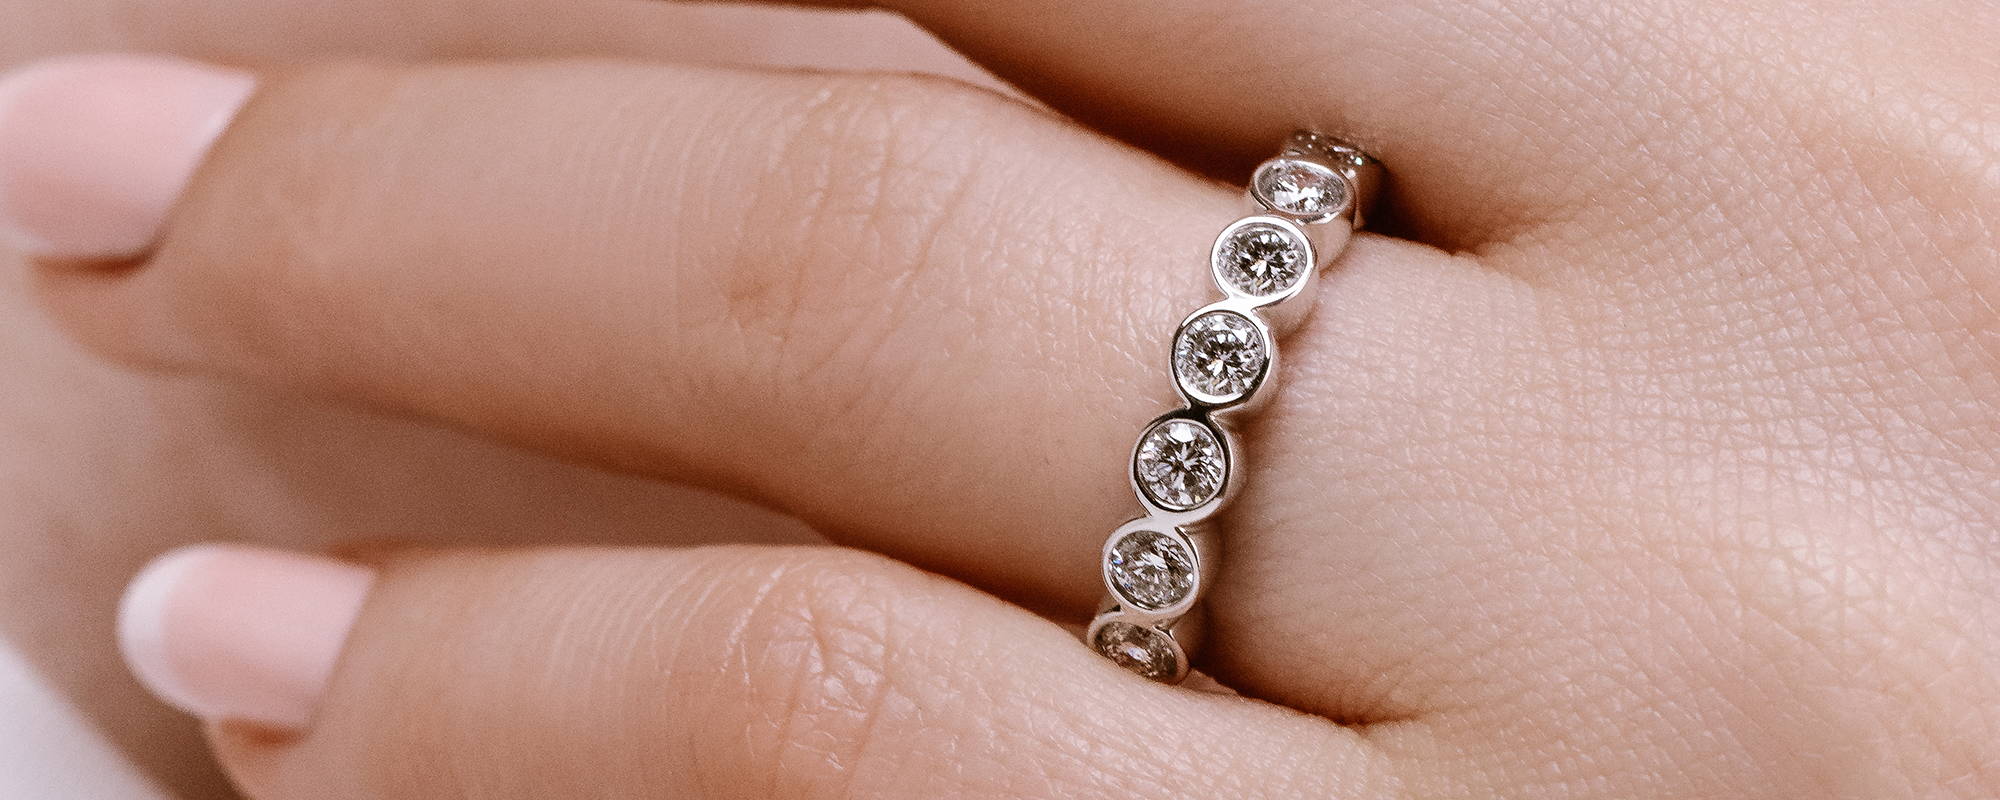 Rings | Beautiful Hand Rings 💍 | Freeup